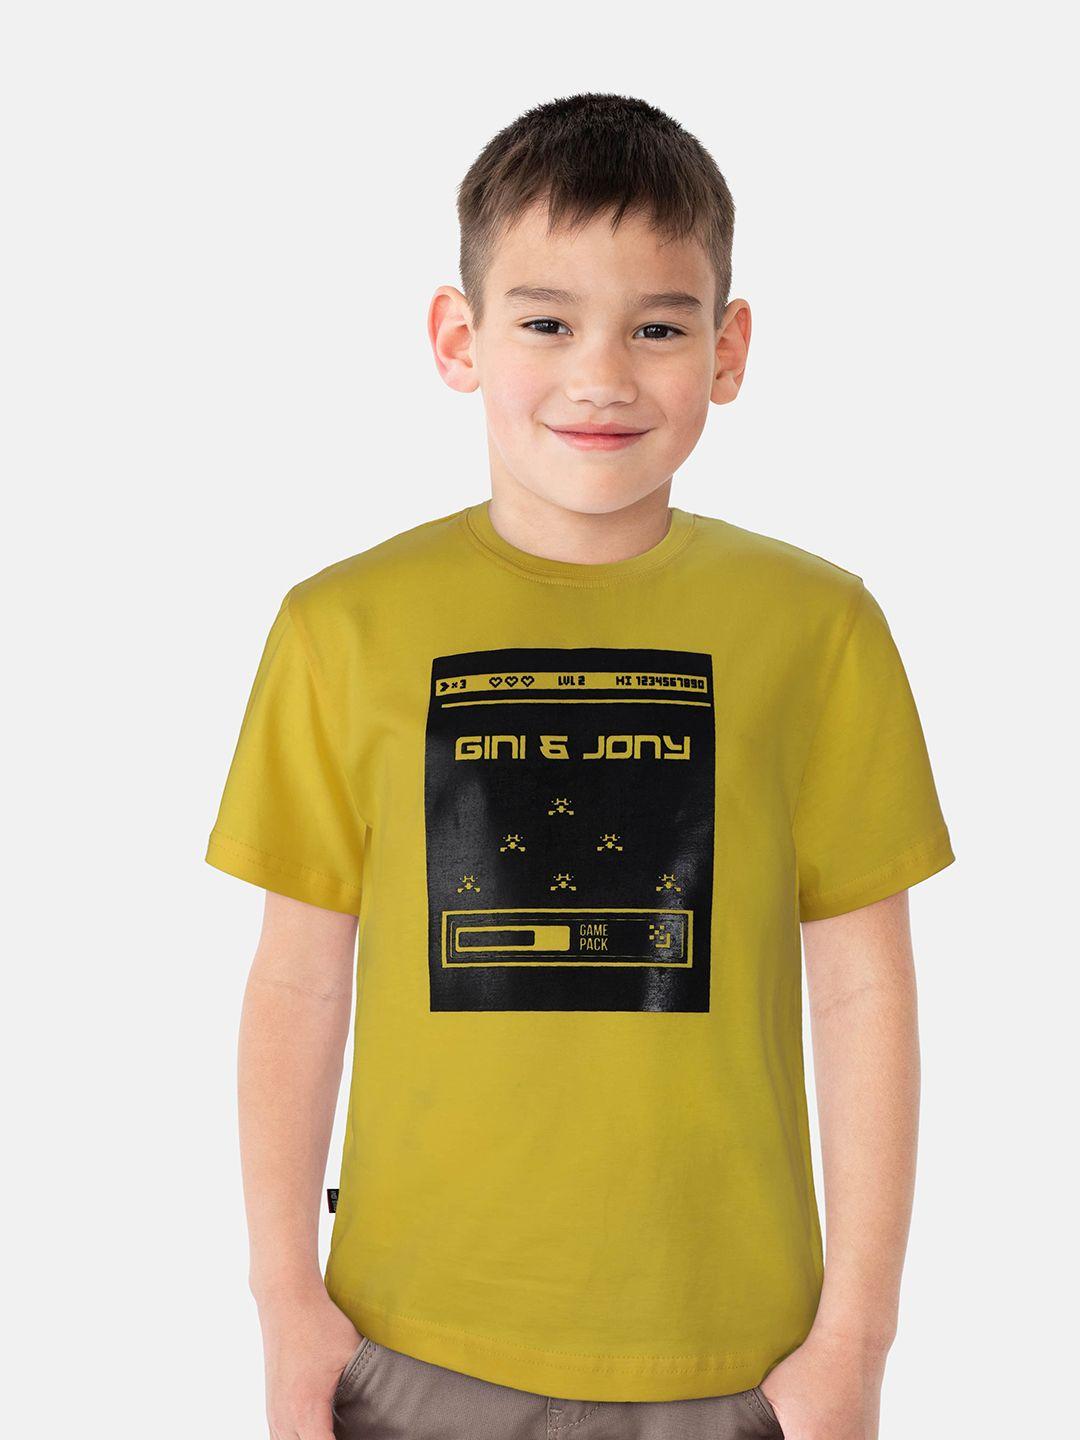 gini-and-jony-boys-yellow-printed-t-shirt